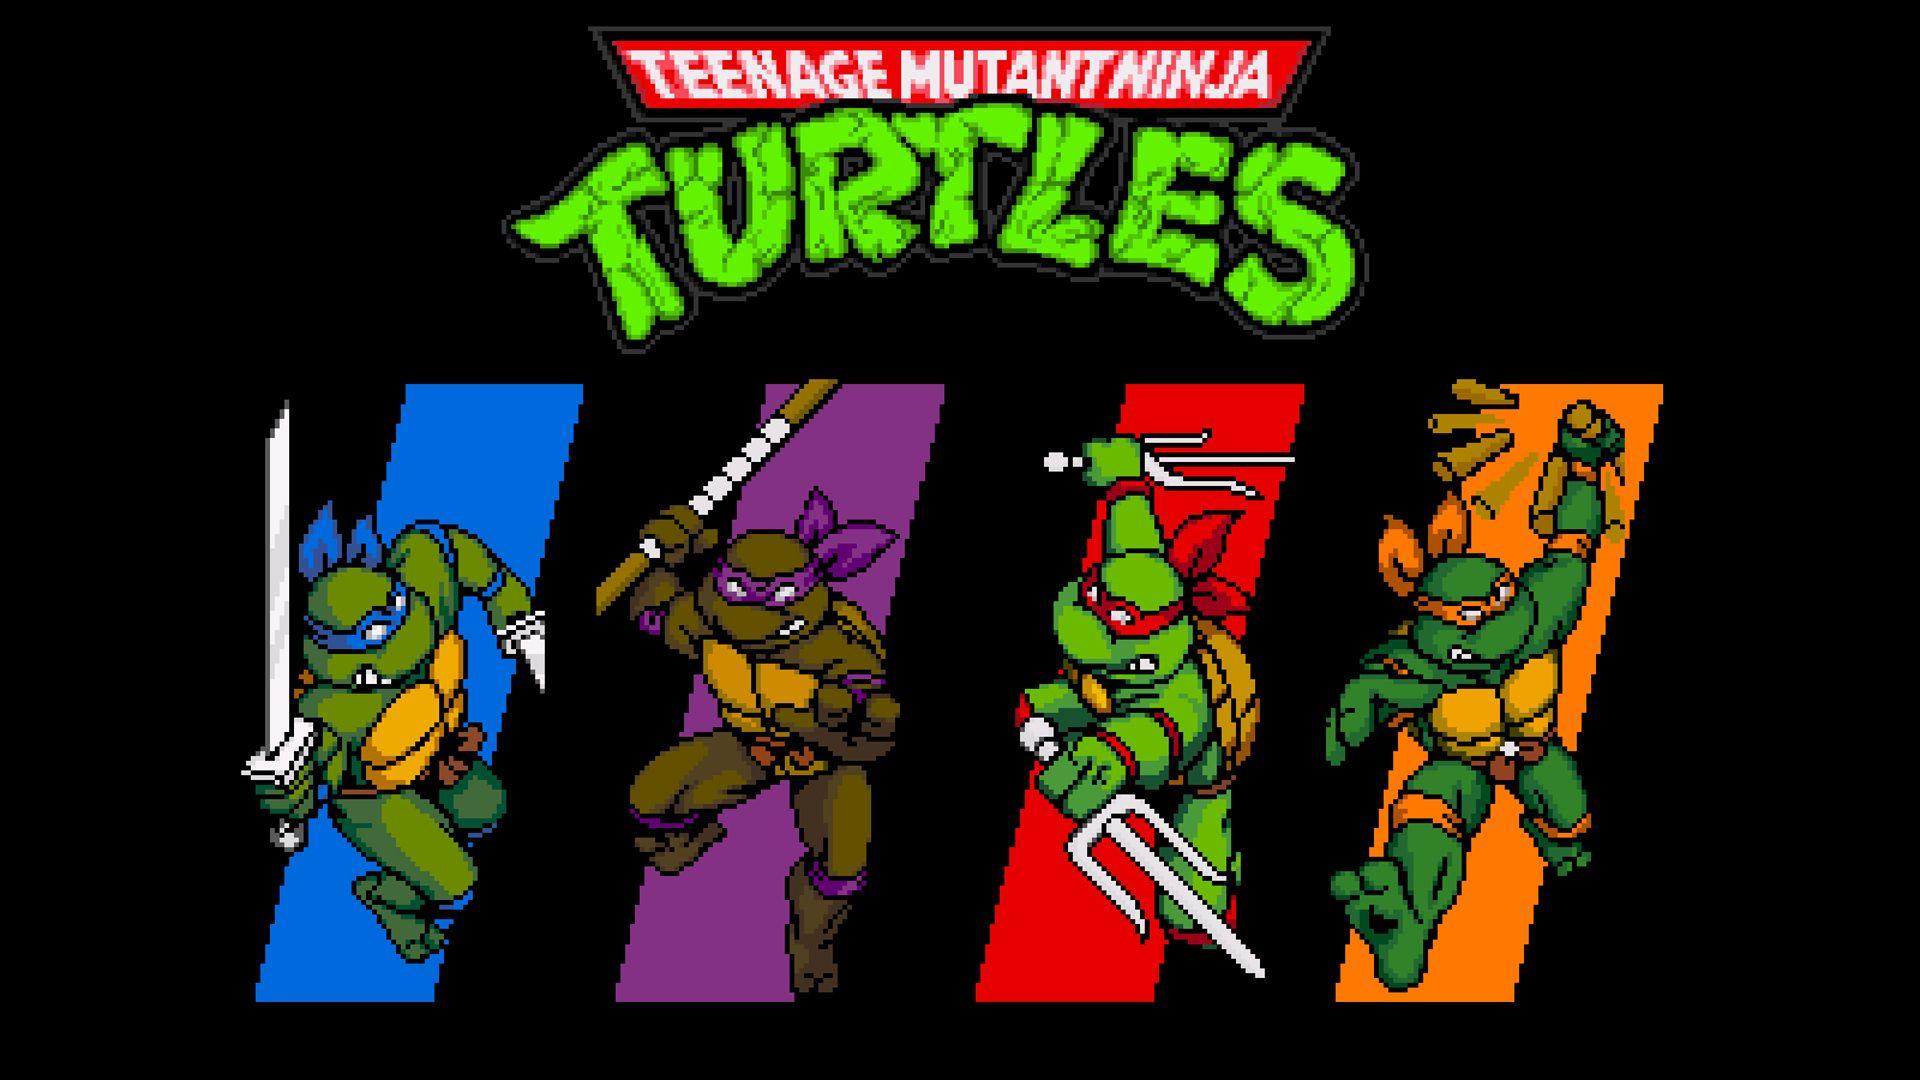 Teenage Mutant Ninja Turtles Desktop Wallpapers Wallpaper Cave